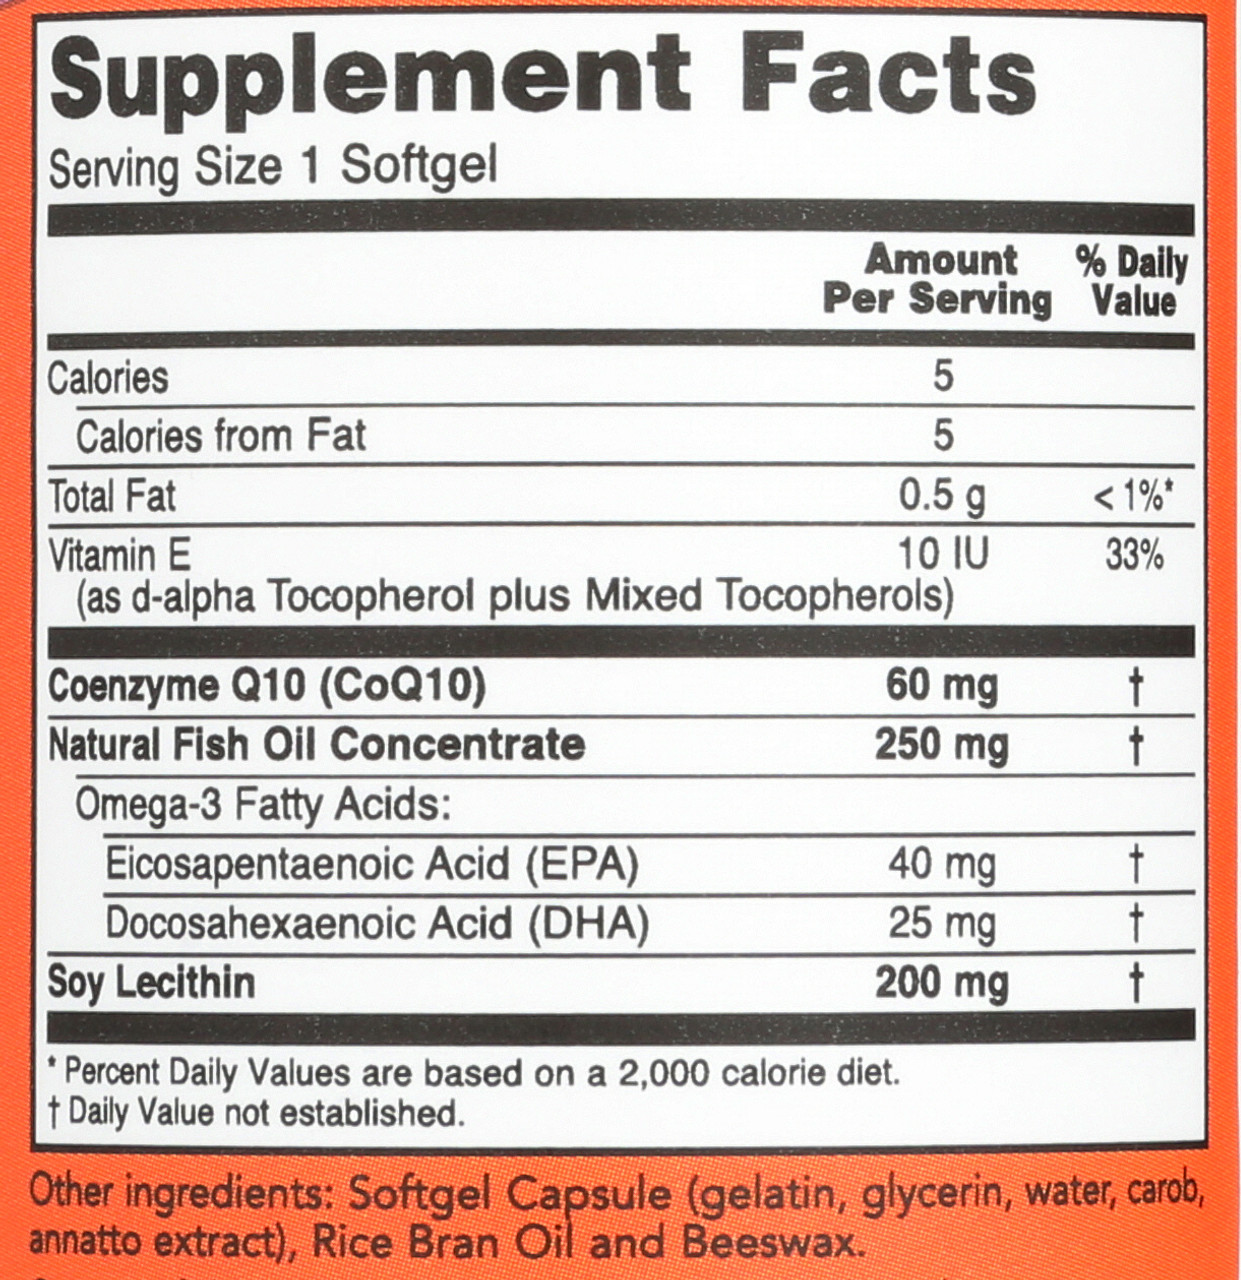 CoQ10 60 mg with Omega 3 Fish Oil - 60 Softgels